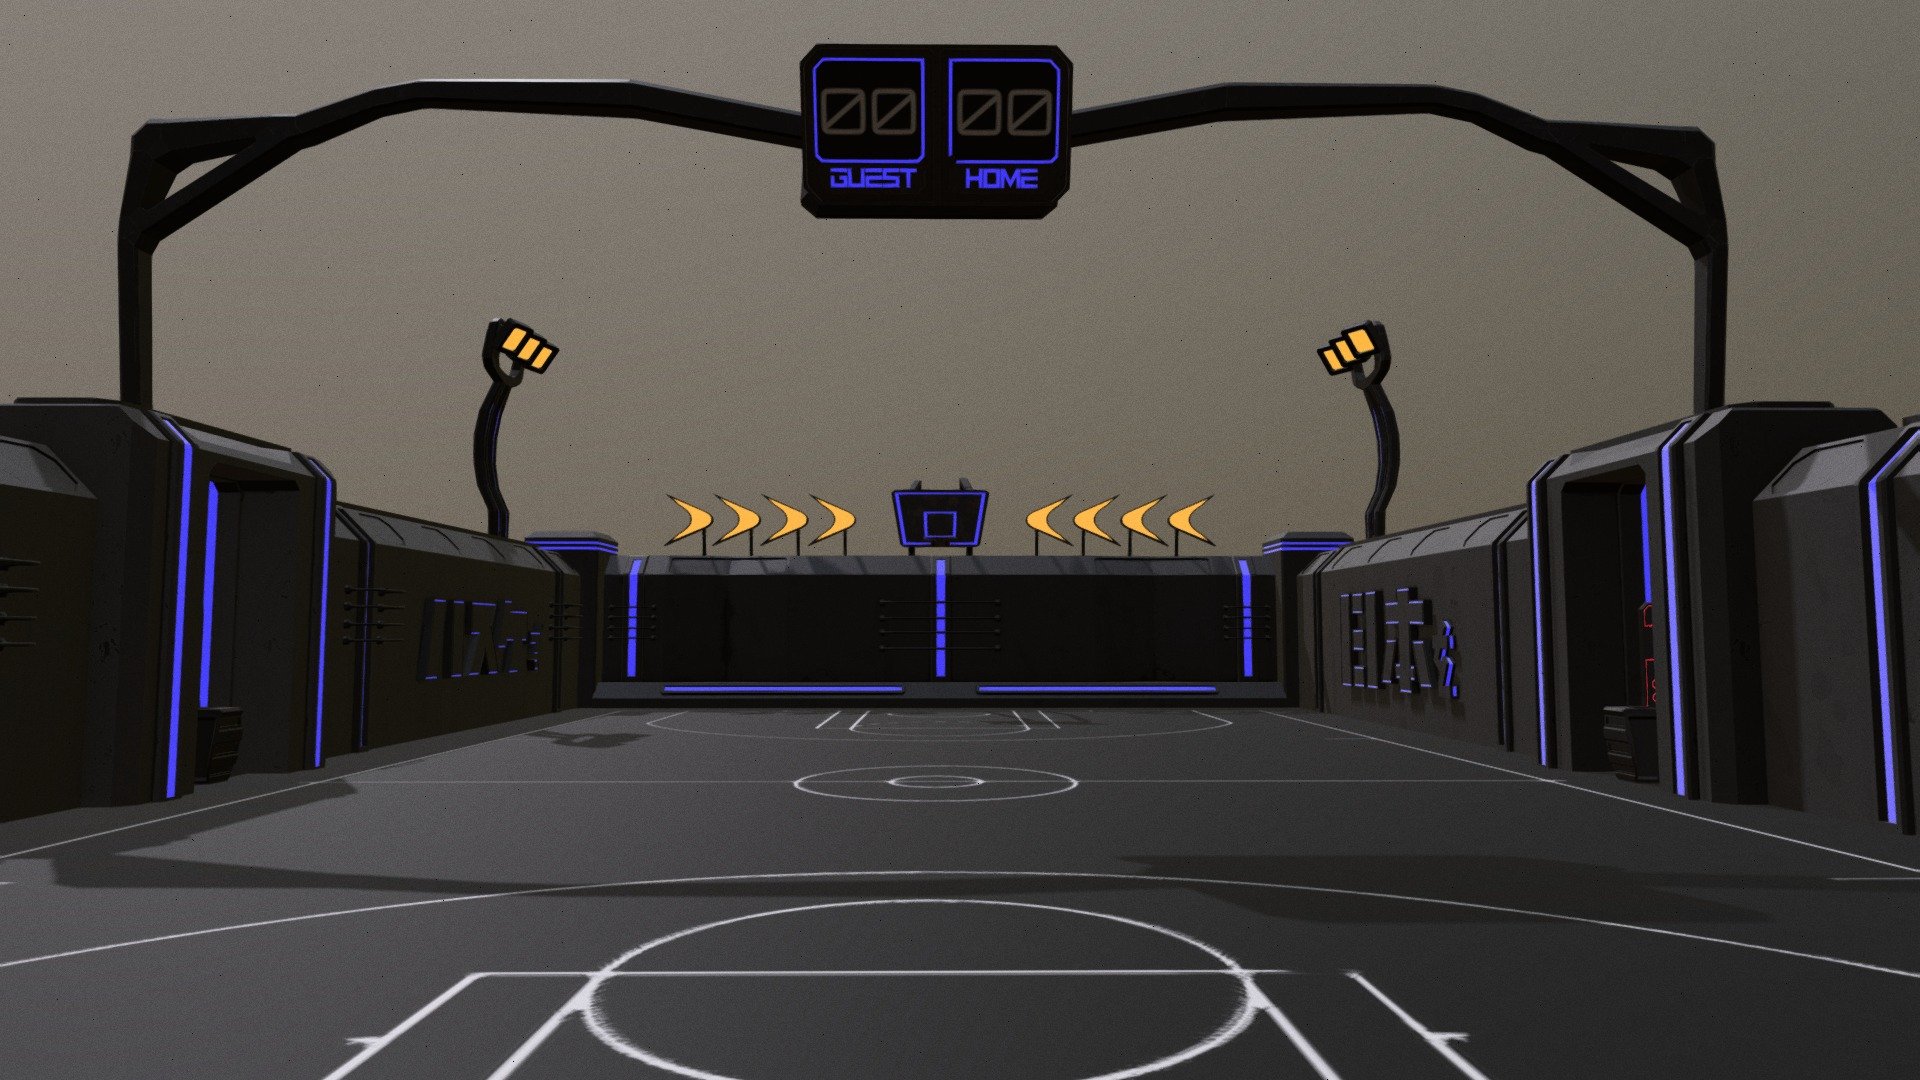 cyberpunk or futuristic style basketball court
with neon - Basketball Court Cyberpunk Style - 3D model by aterlastudio 3d model